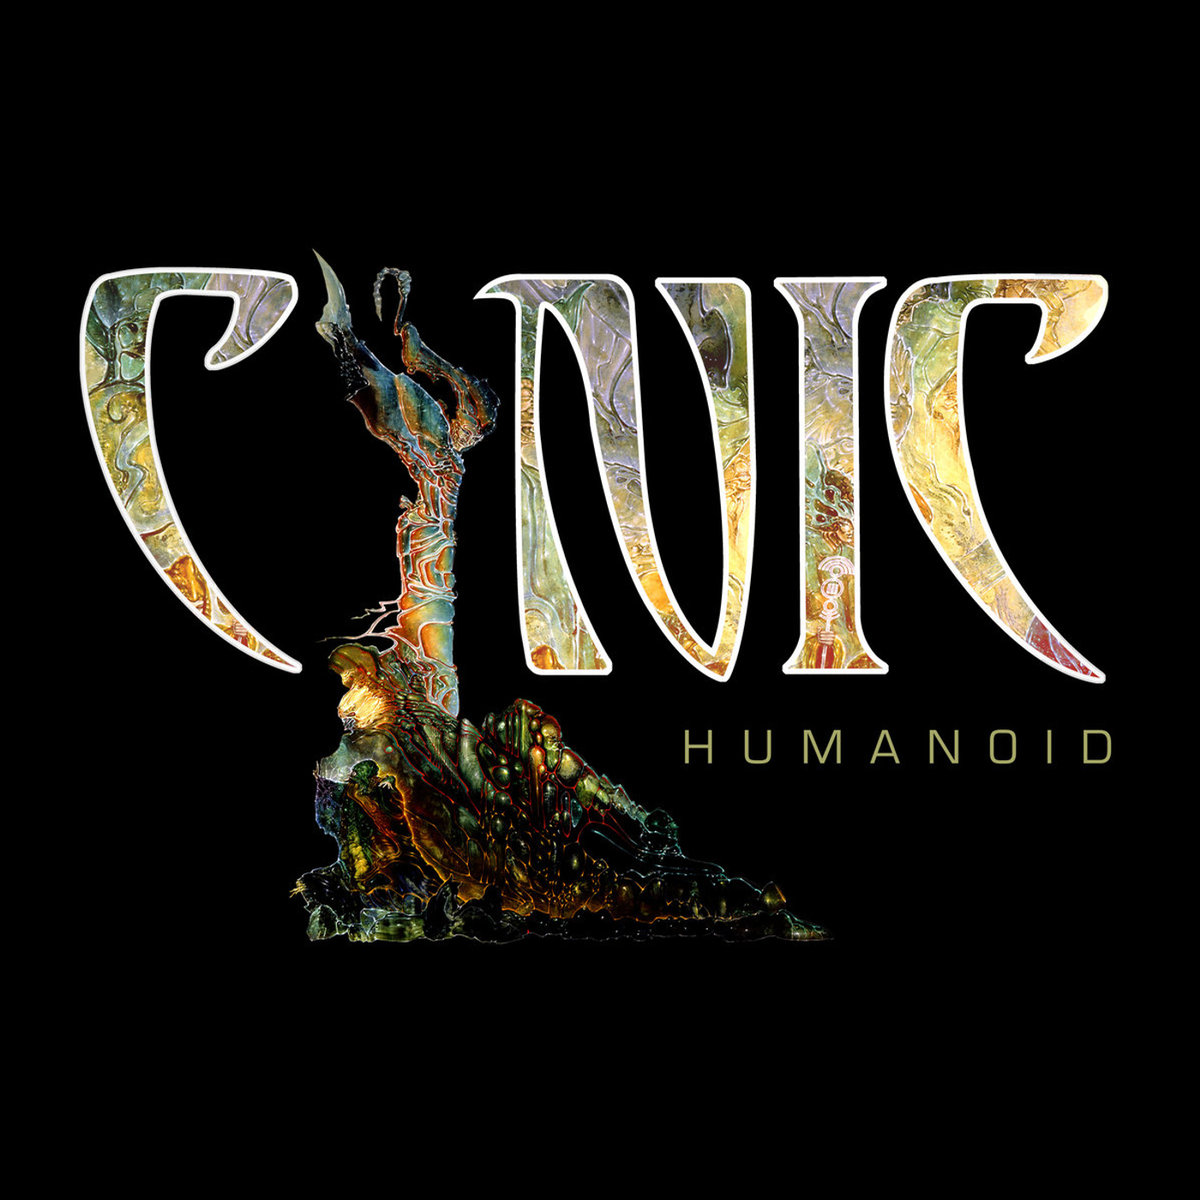 CYNIC - Humanoid cover 